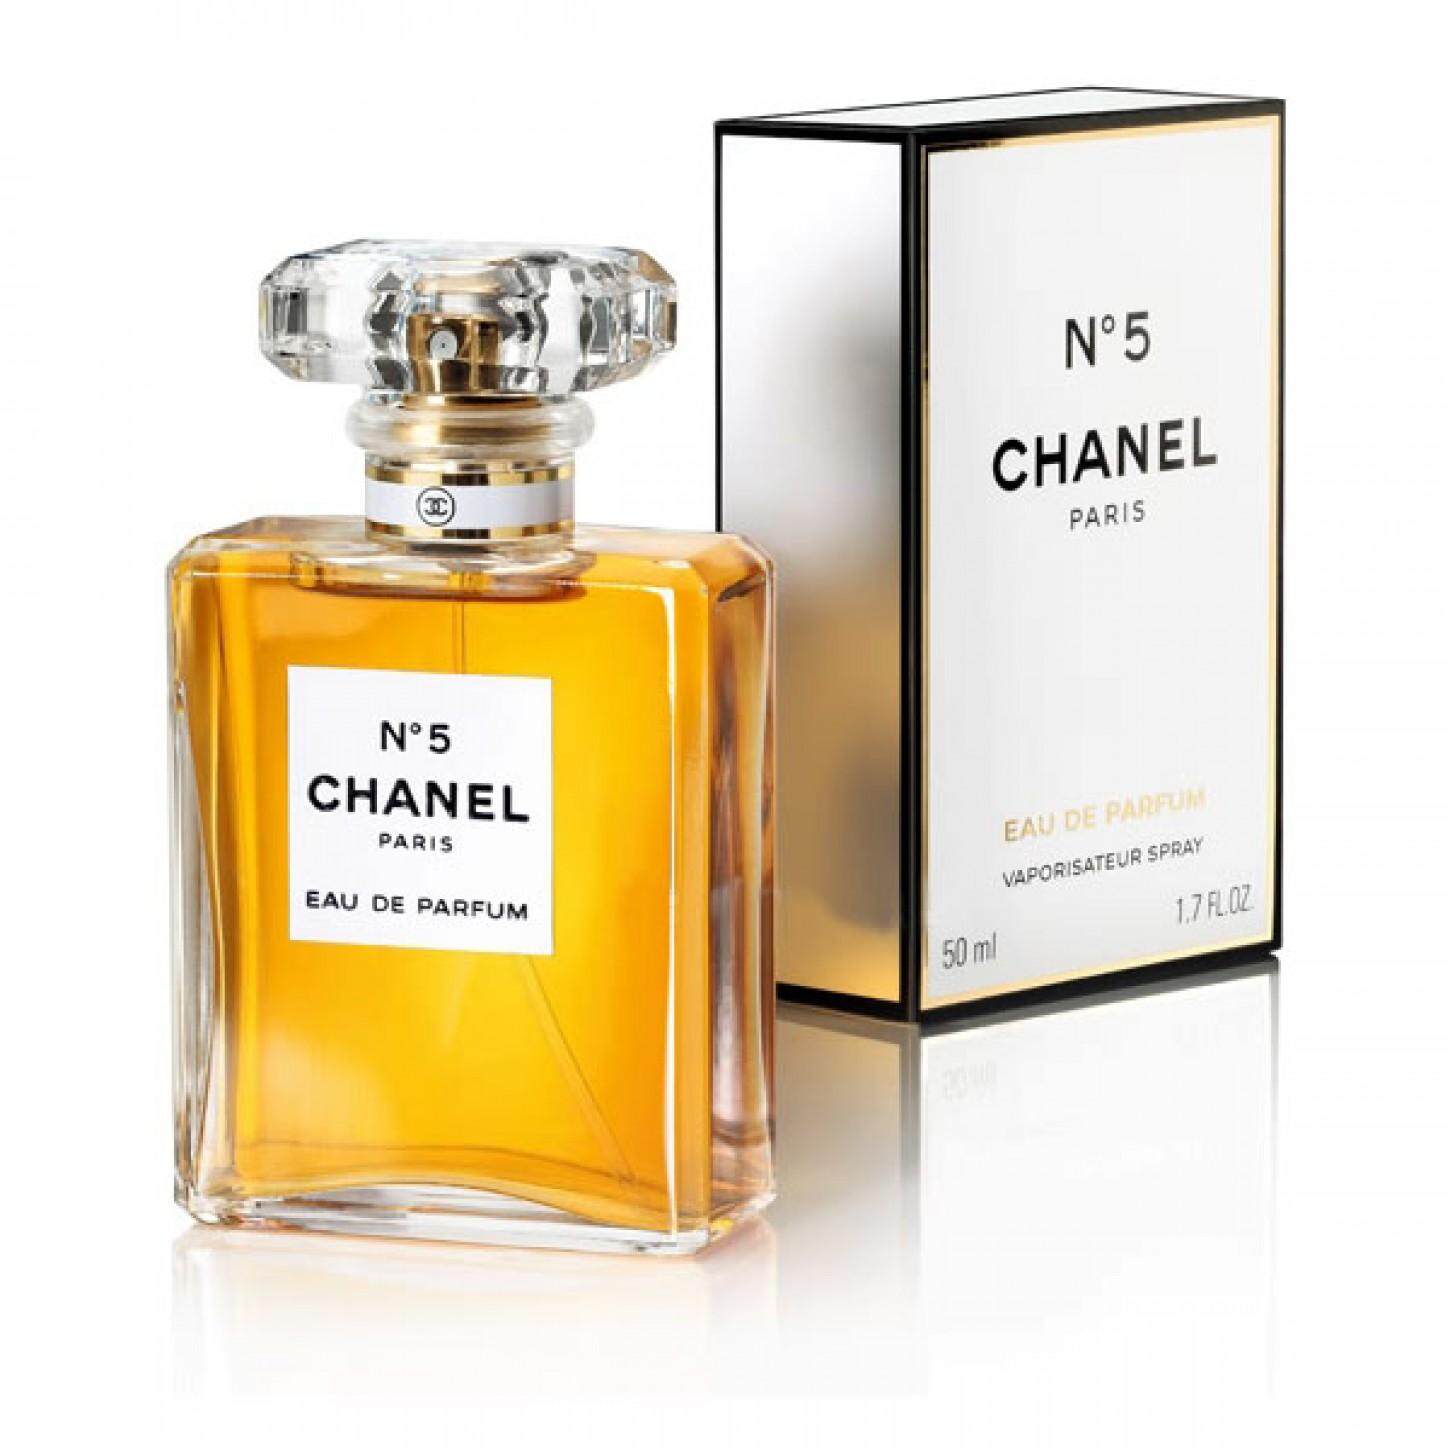 Chanel No 5 Eau de Parfum 50ml, Buy Online